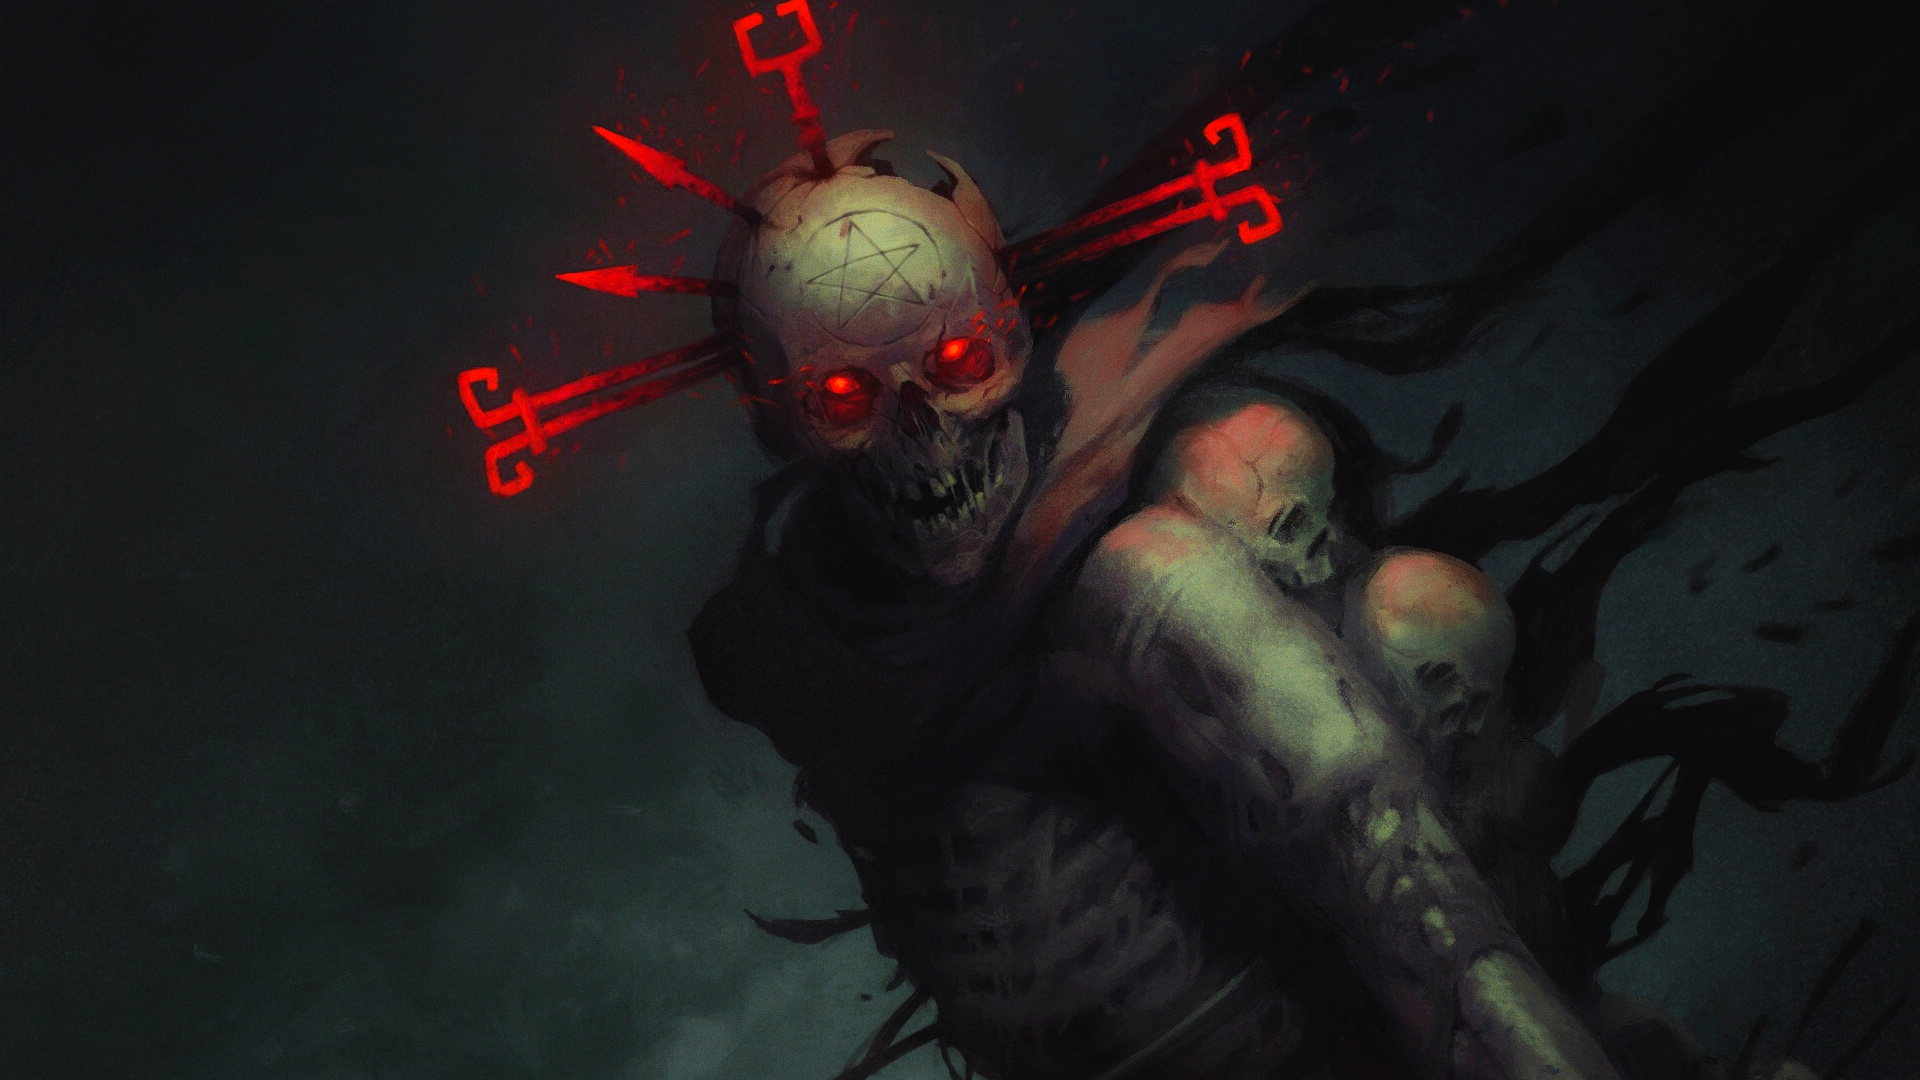 Skull And Bones Skull Horror Artwork Dark Dark Fantasy Smiling Shadow Red Eyes DOOM Eternal Looking  1920x1080